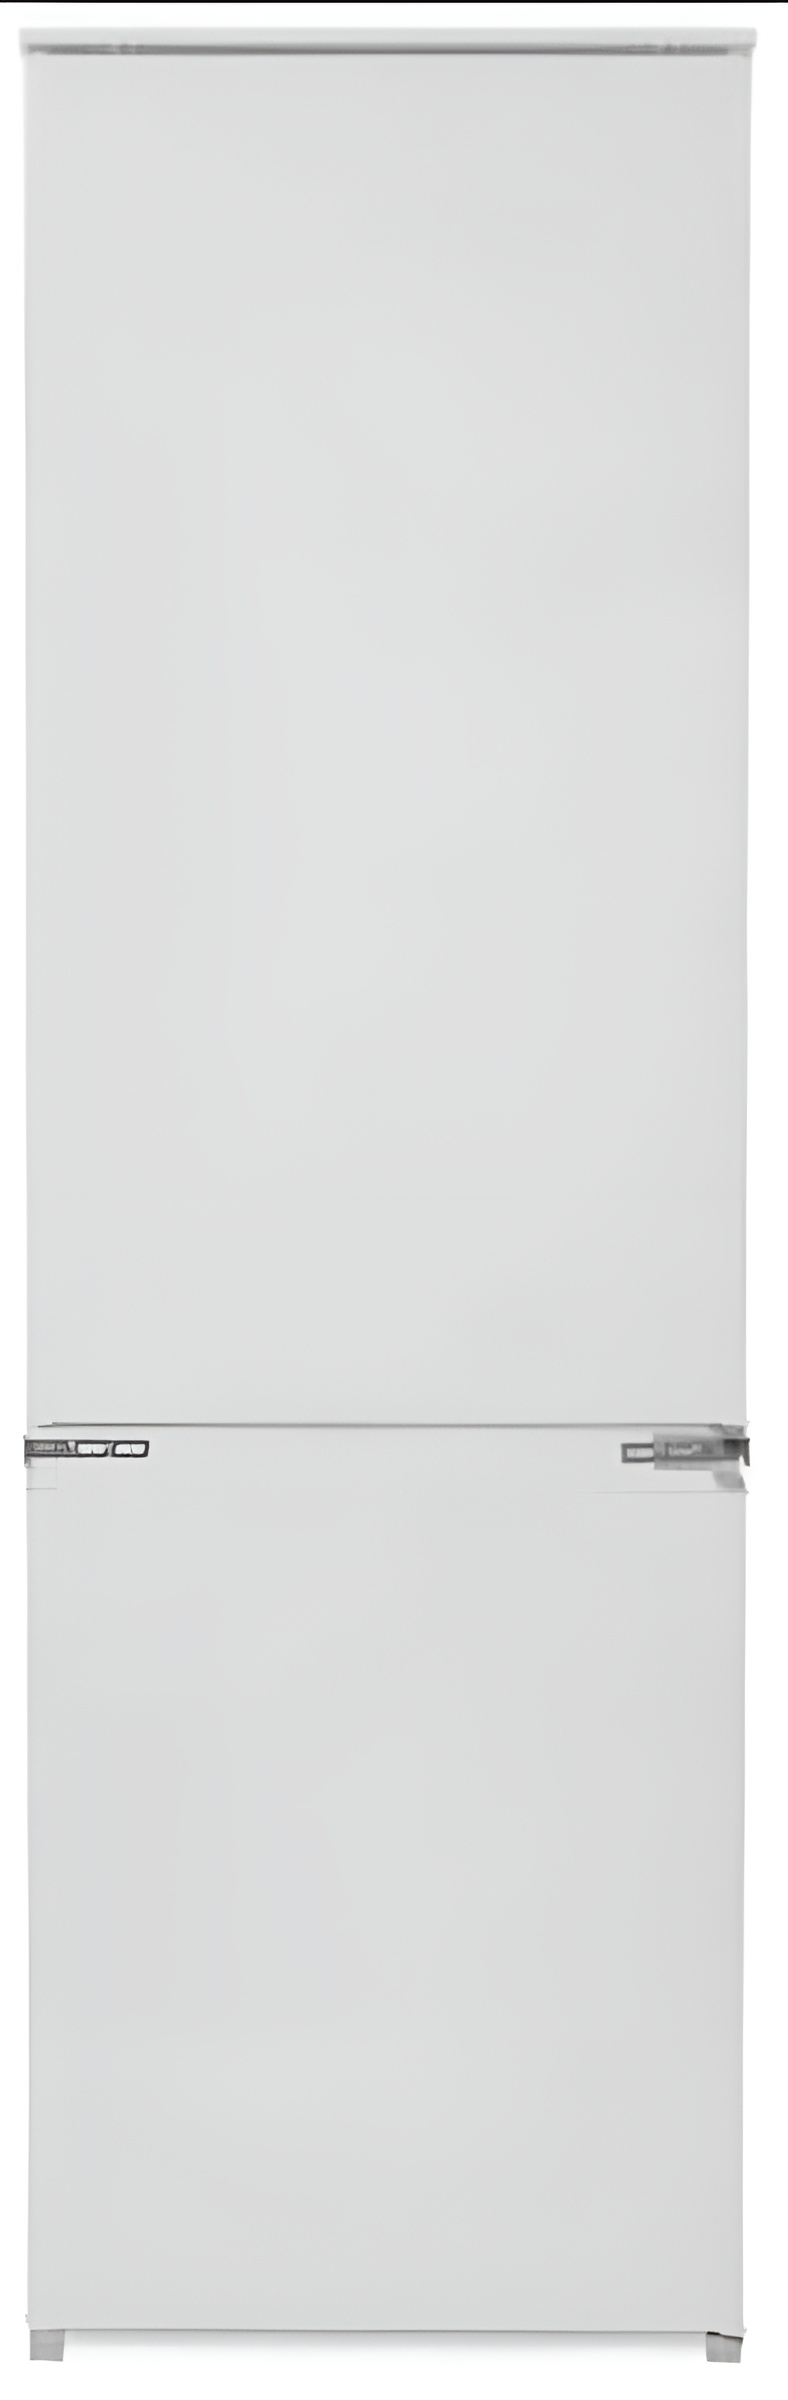 Холодильник Electrolux ENN 92801 BW в интернет-магазине, главное фото